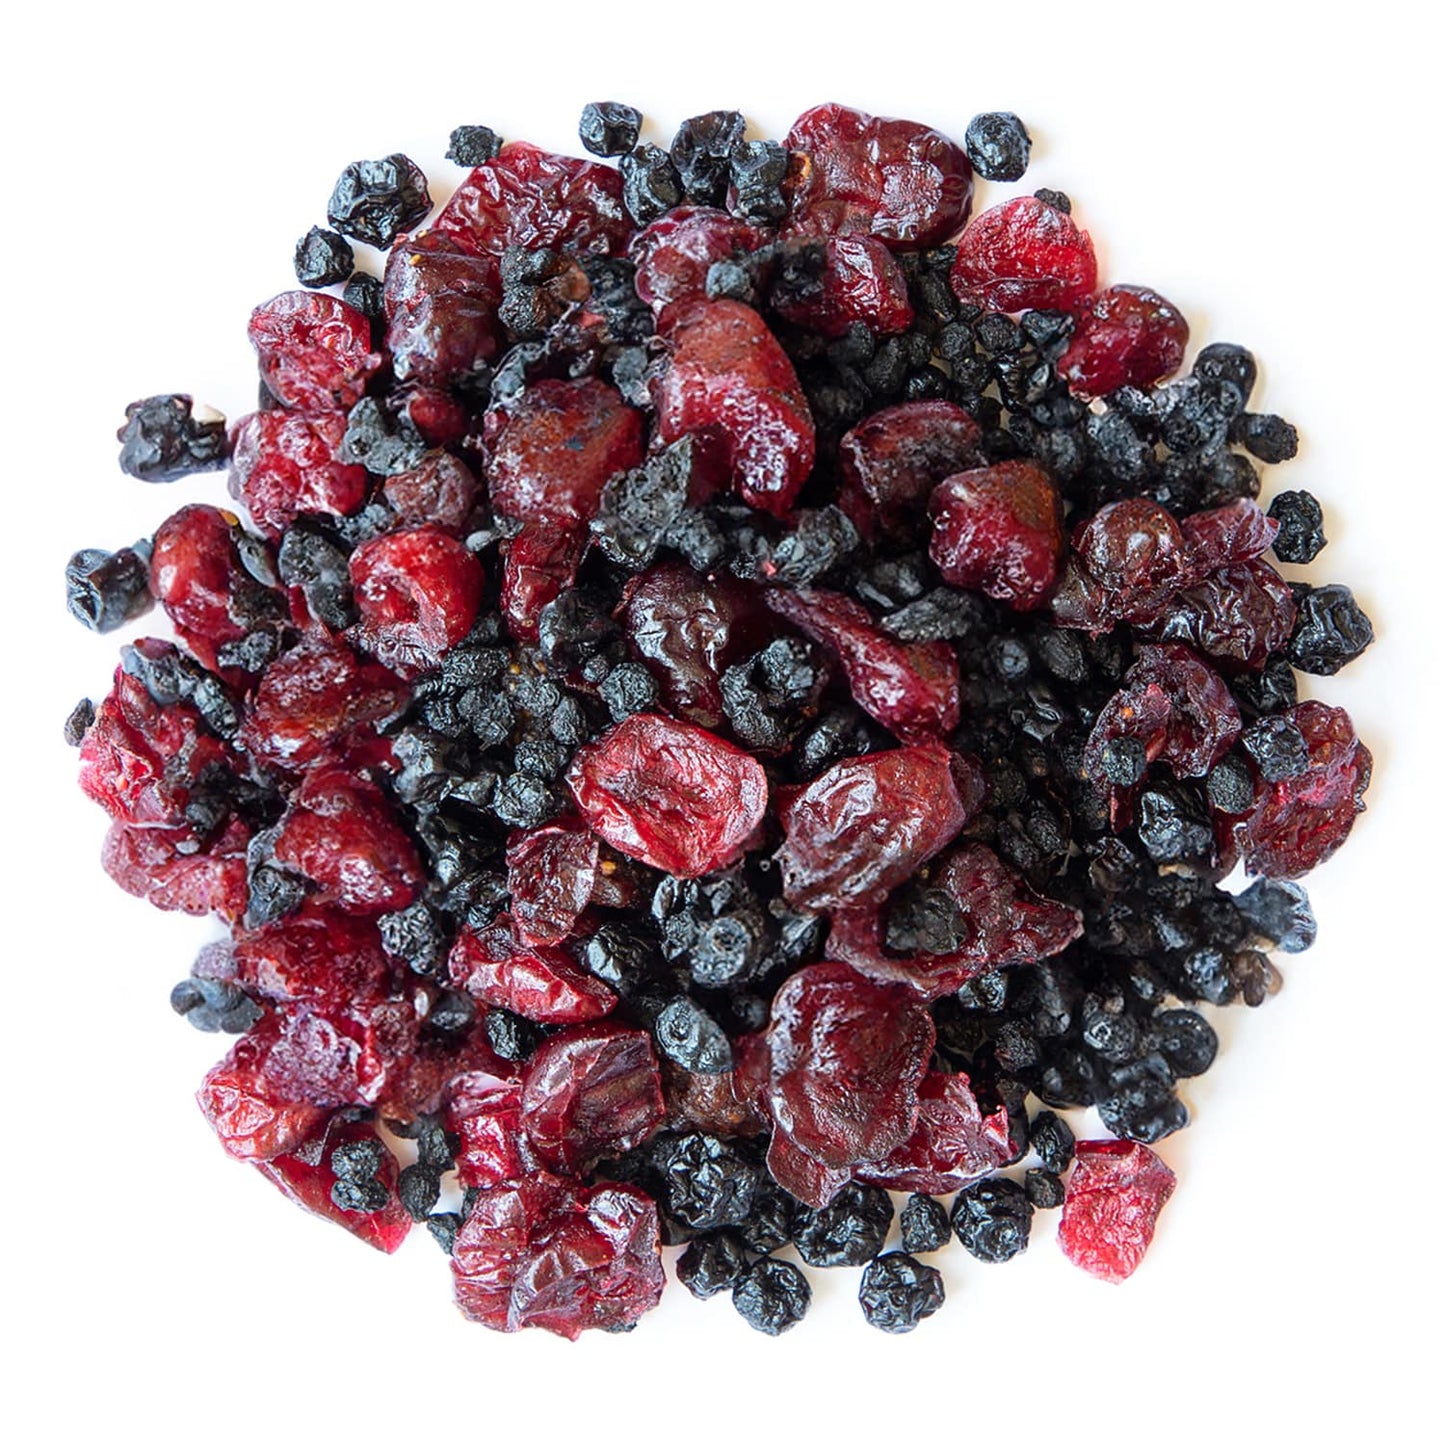 Organic Delicious Berries Mix with Cranberries, Blueberries, and Elderberries - Non-GMO, Kosher, Vegan, Unsulfured, Bulk